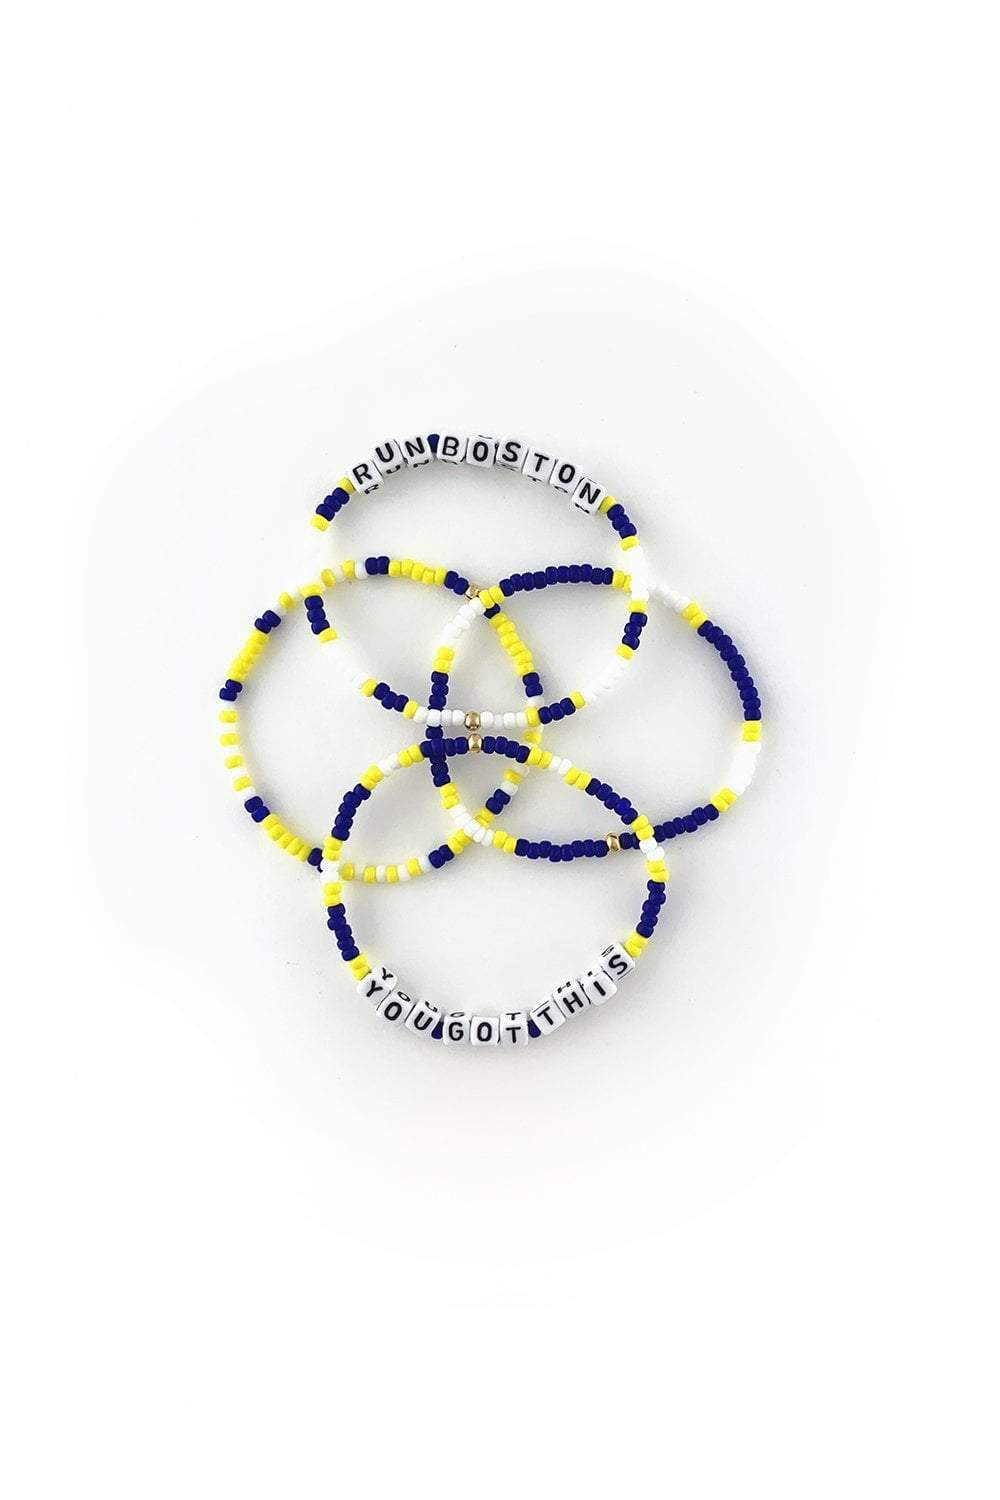 Sarah Marie Design Studio Bracelet 6.25" / Everything Stack You Got This Bracelet - Boston Limited Edition